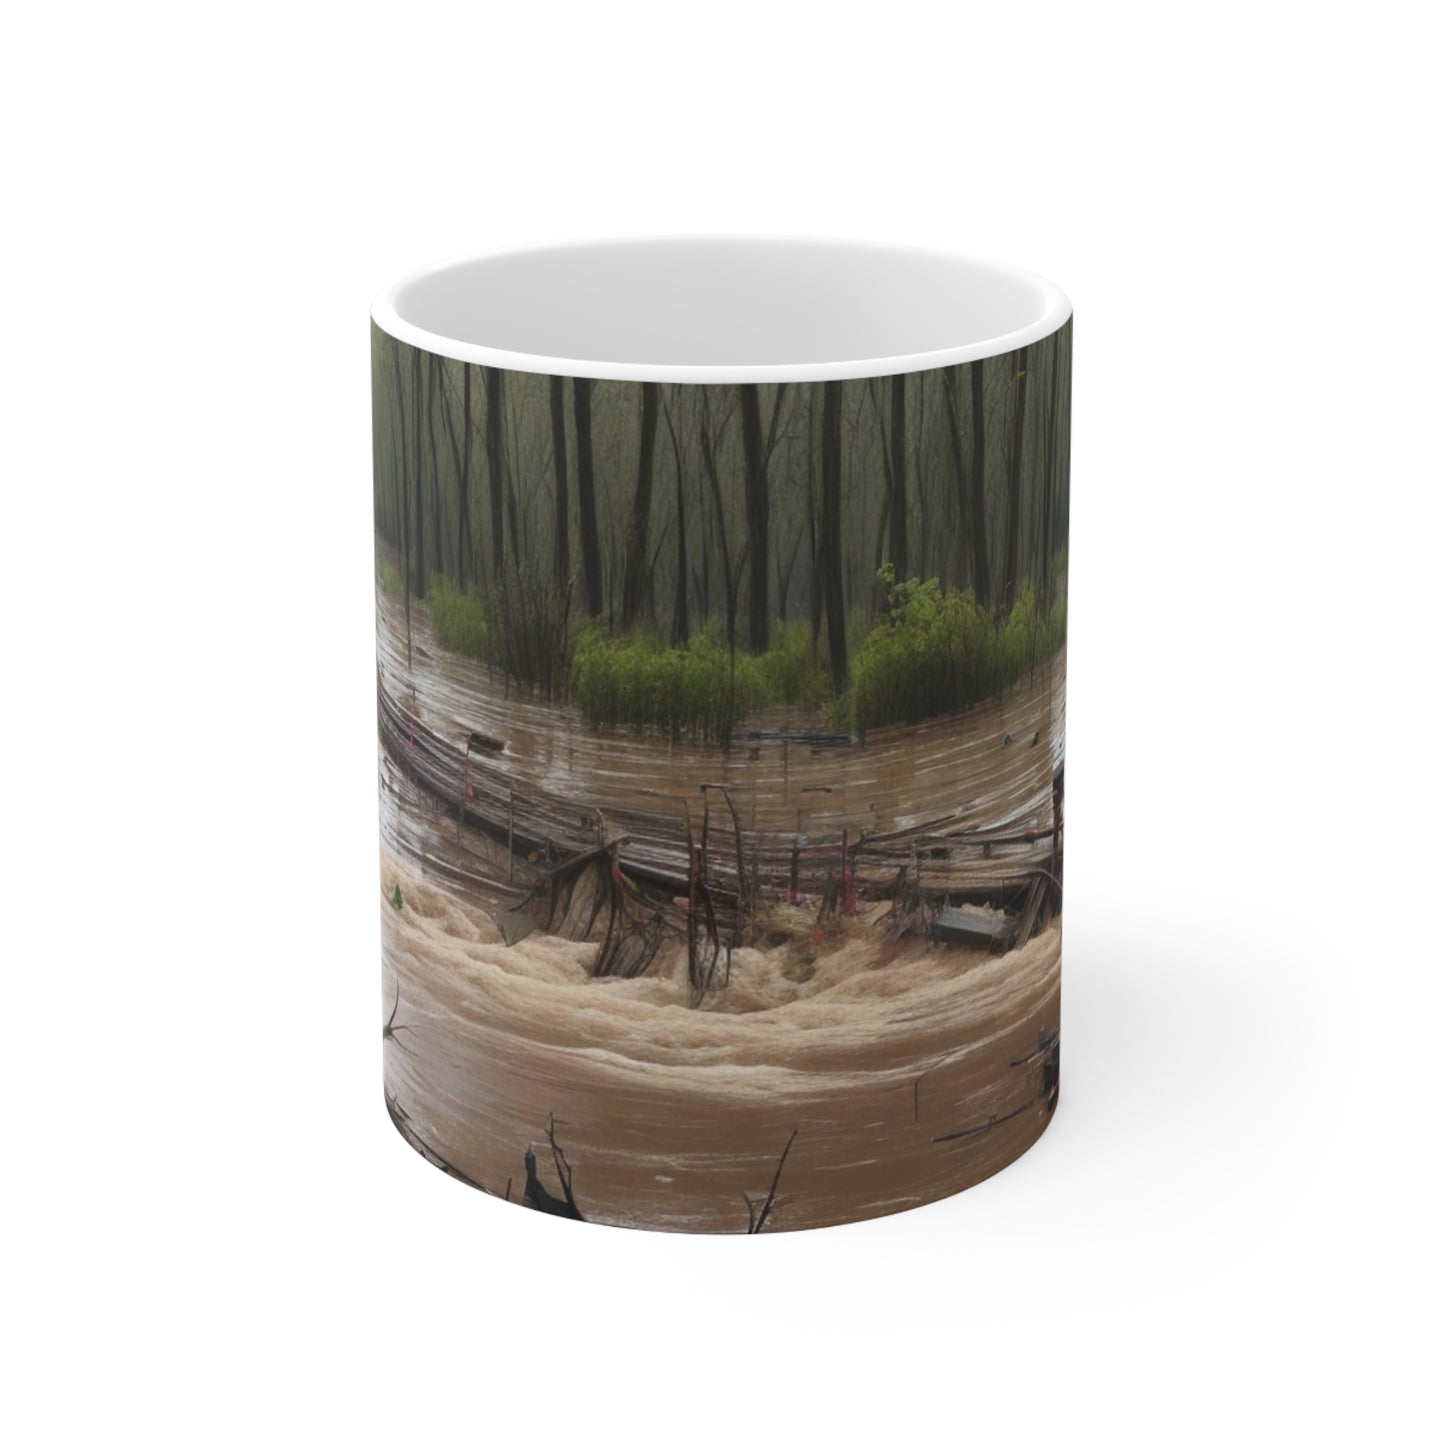 Overflooded Forest Mug - Ceramic Coffee Mug 11oz